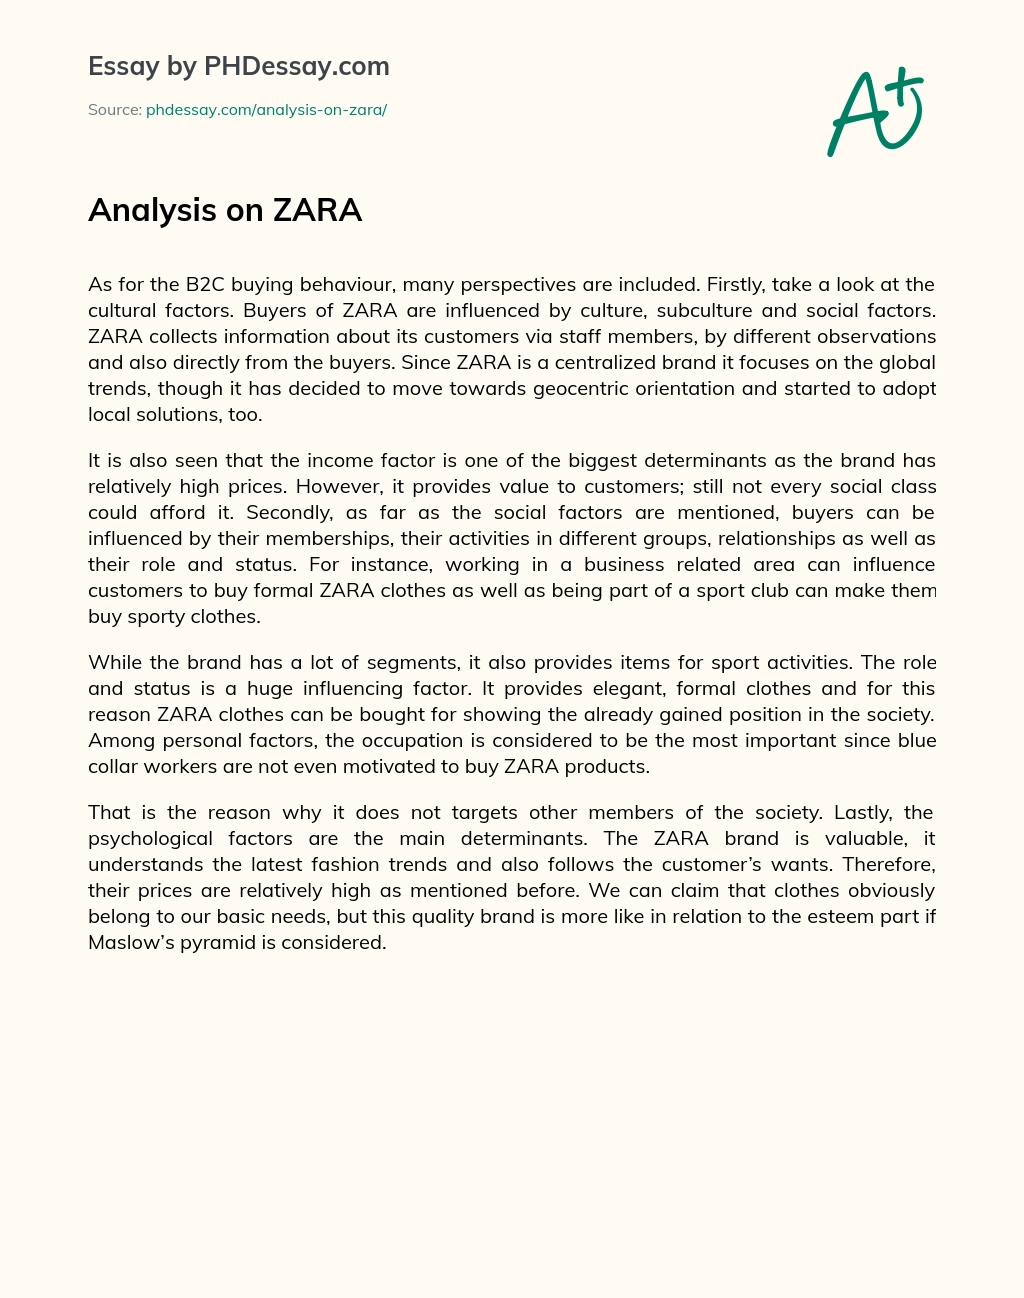 Analysis on ZARA essay